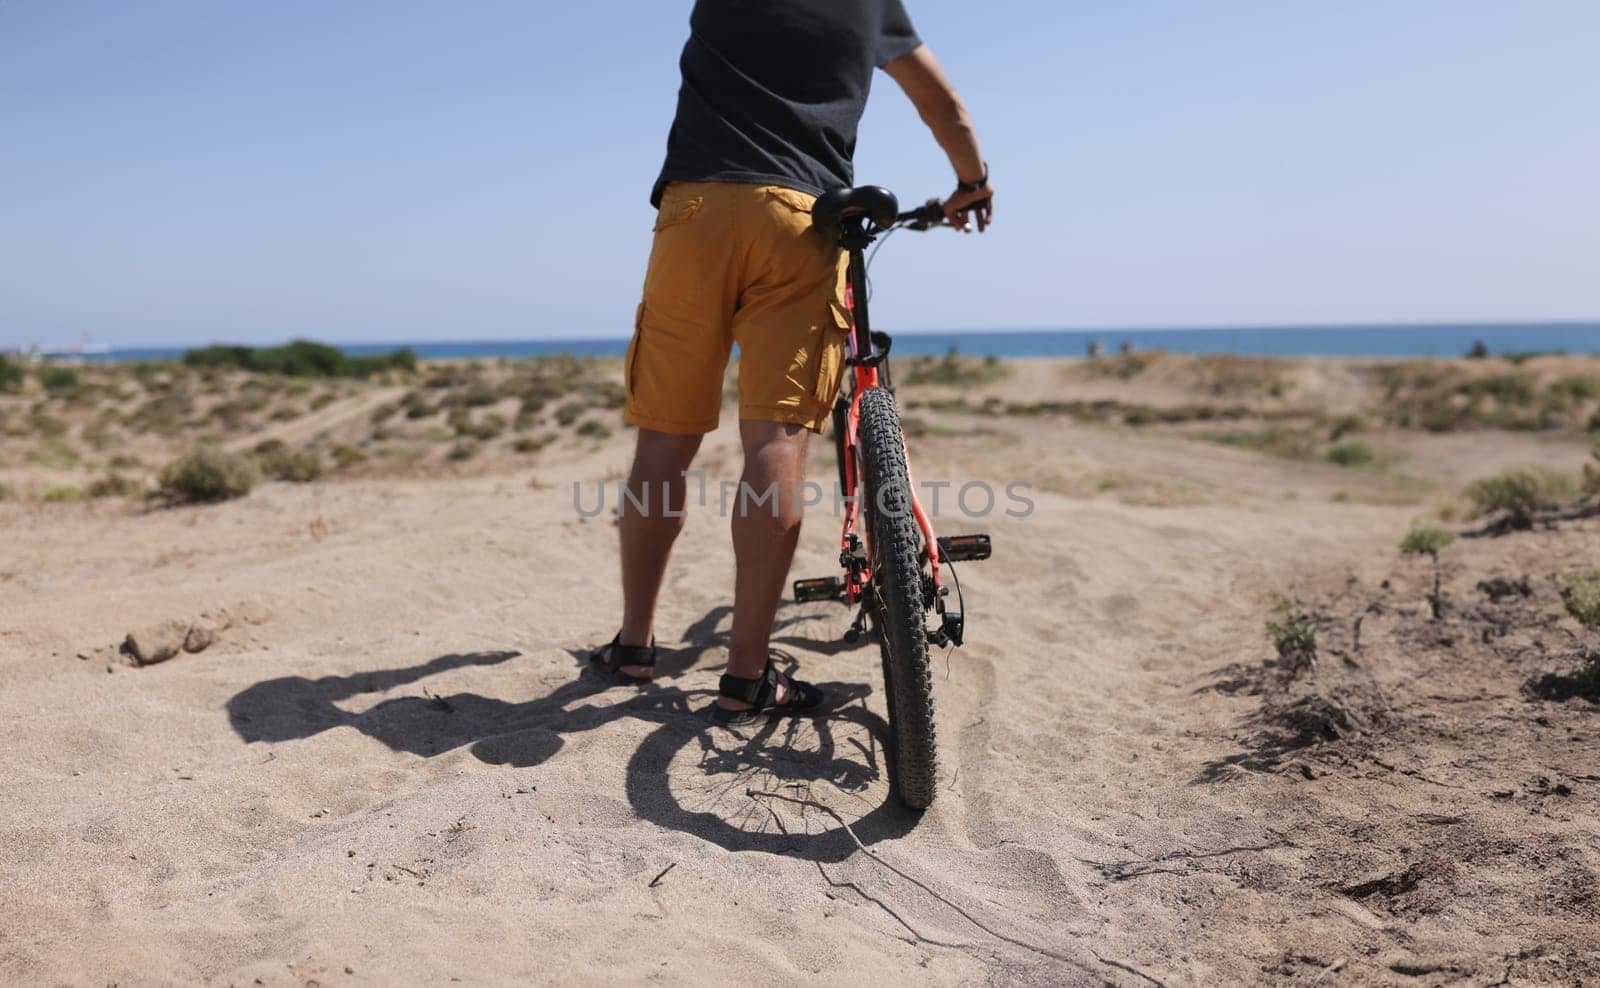 Man holding bike on sand near sea closeup by kuprevich